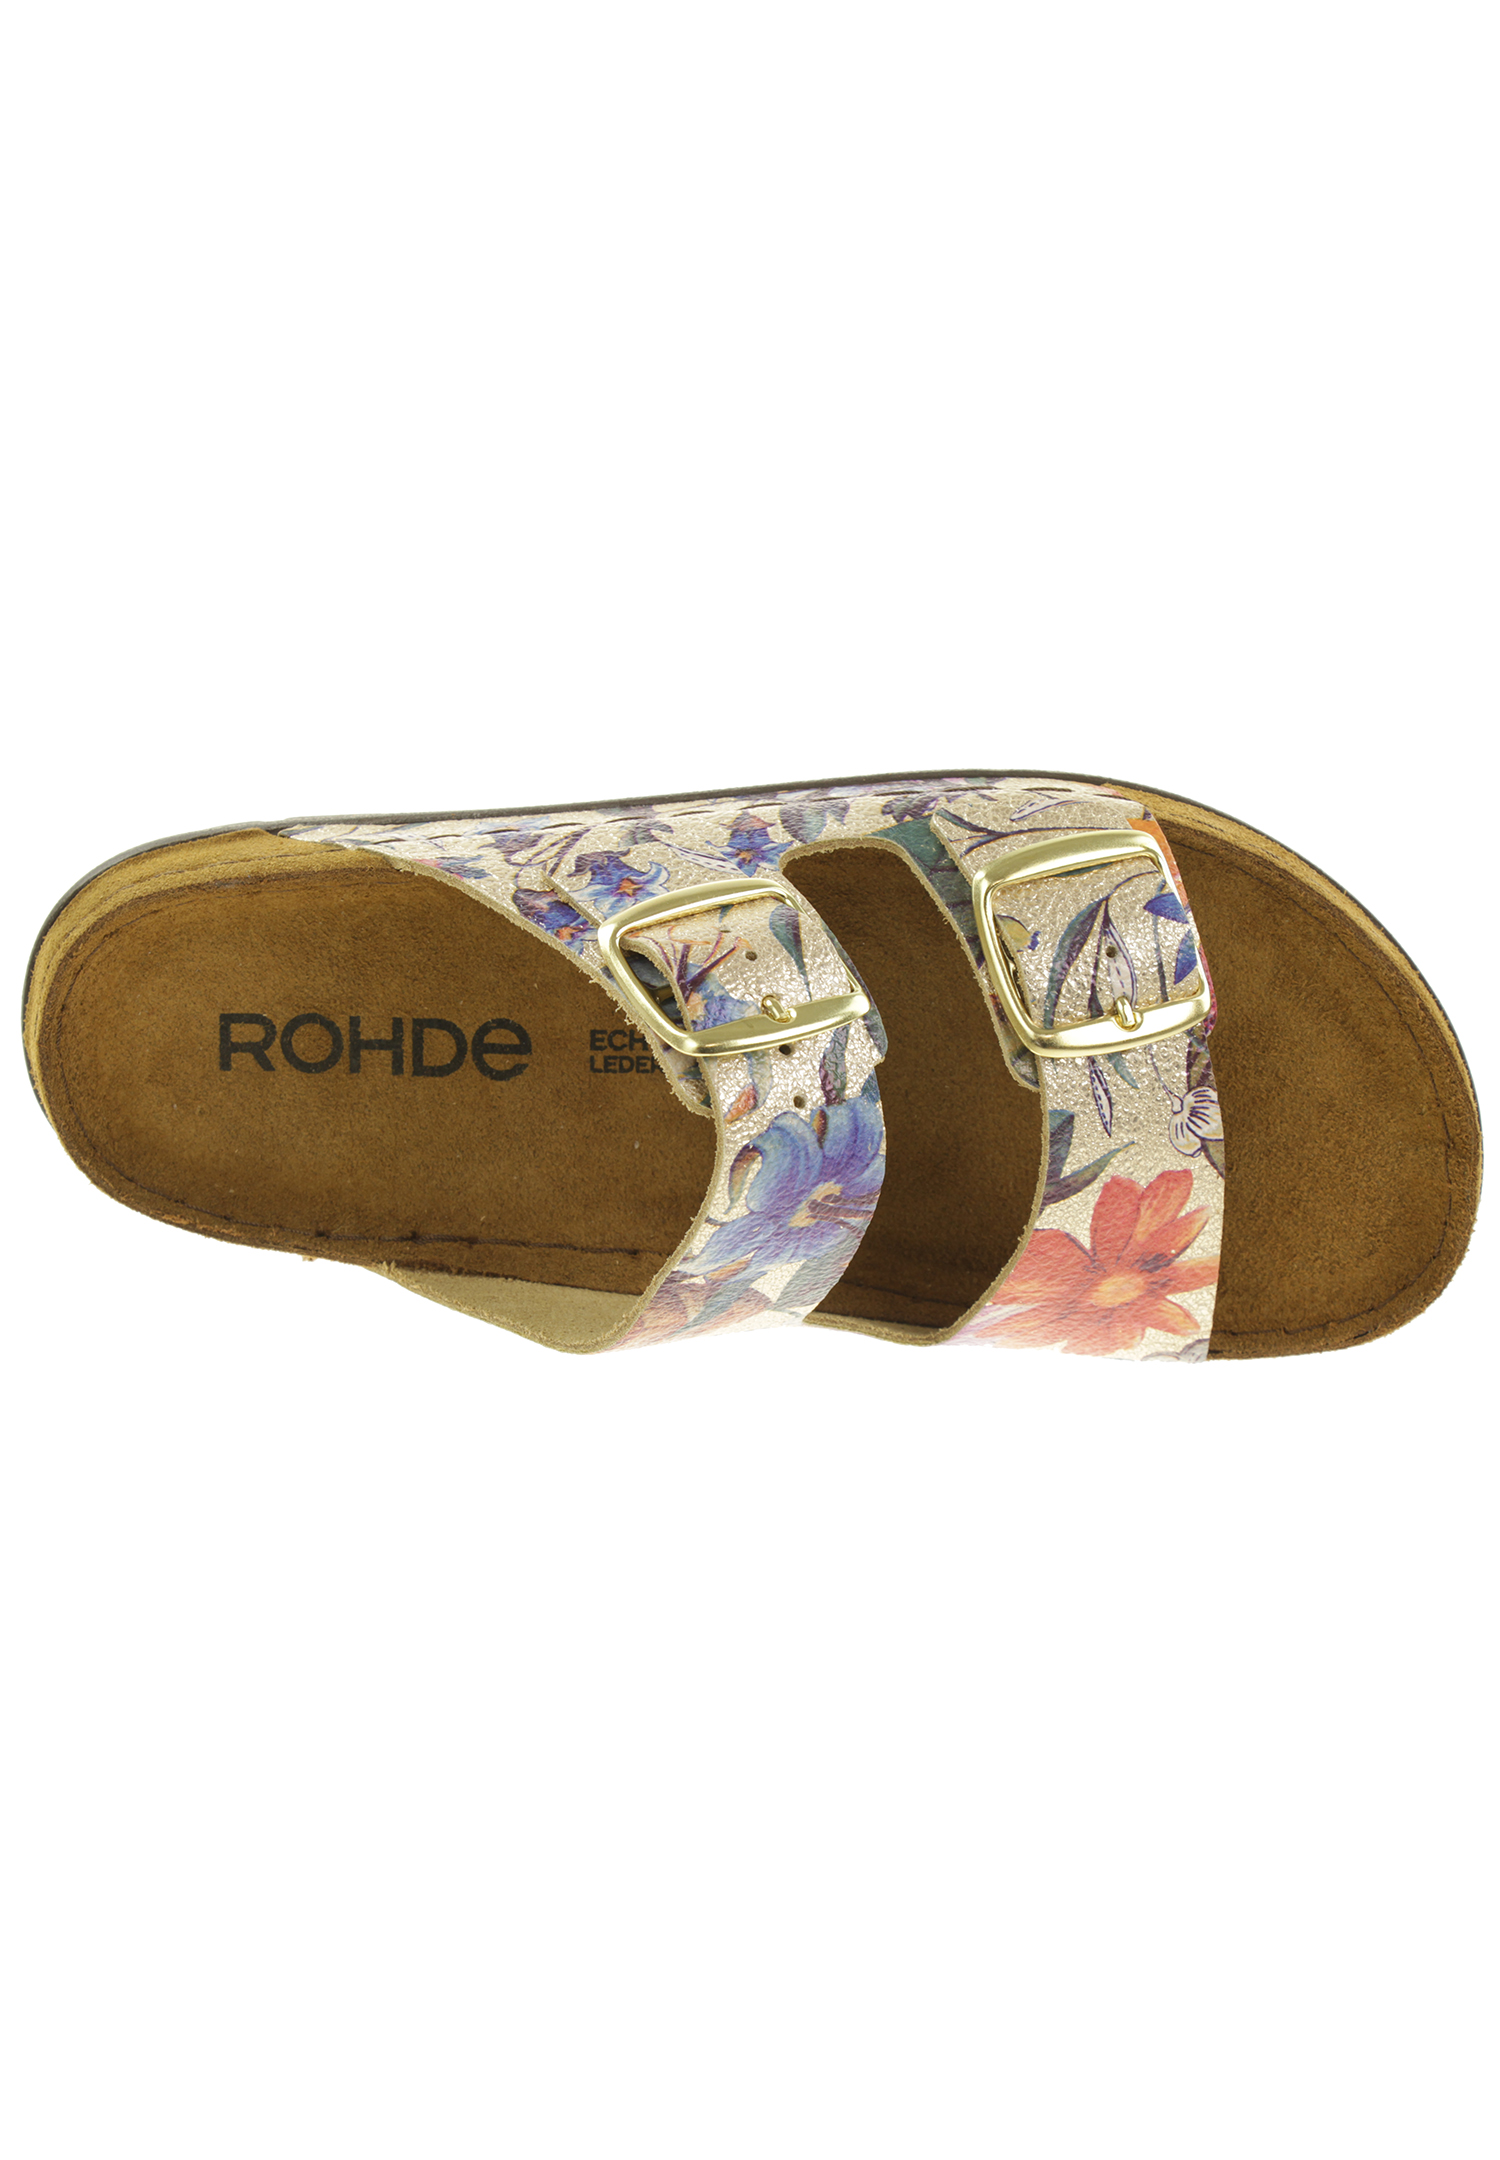 Rohde Rodigo Damen Pantolette Slipper Sandale 5864 Gold 